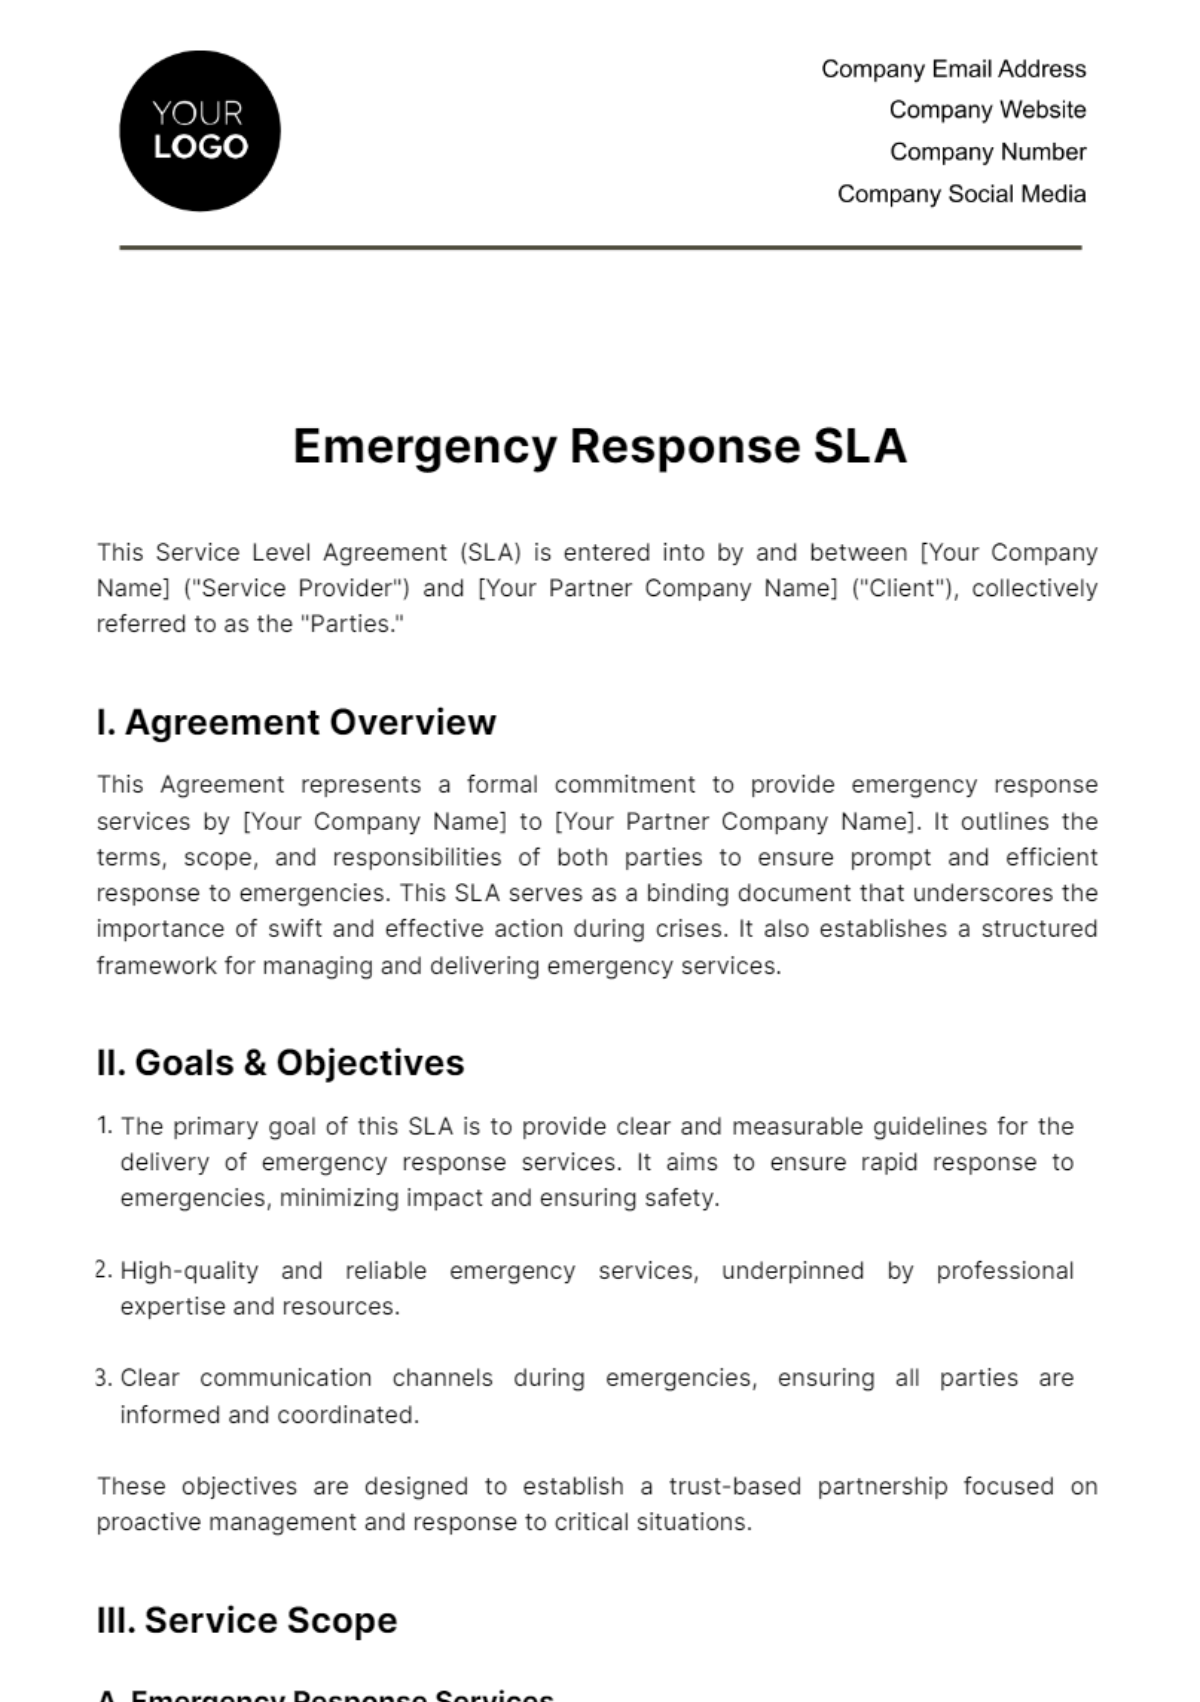 Emergency Response SLA Template